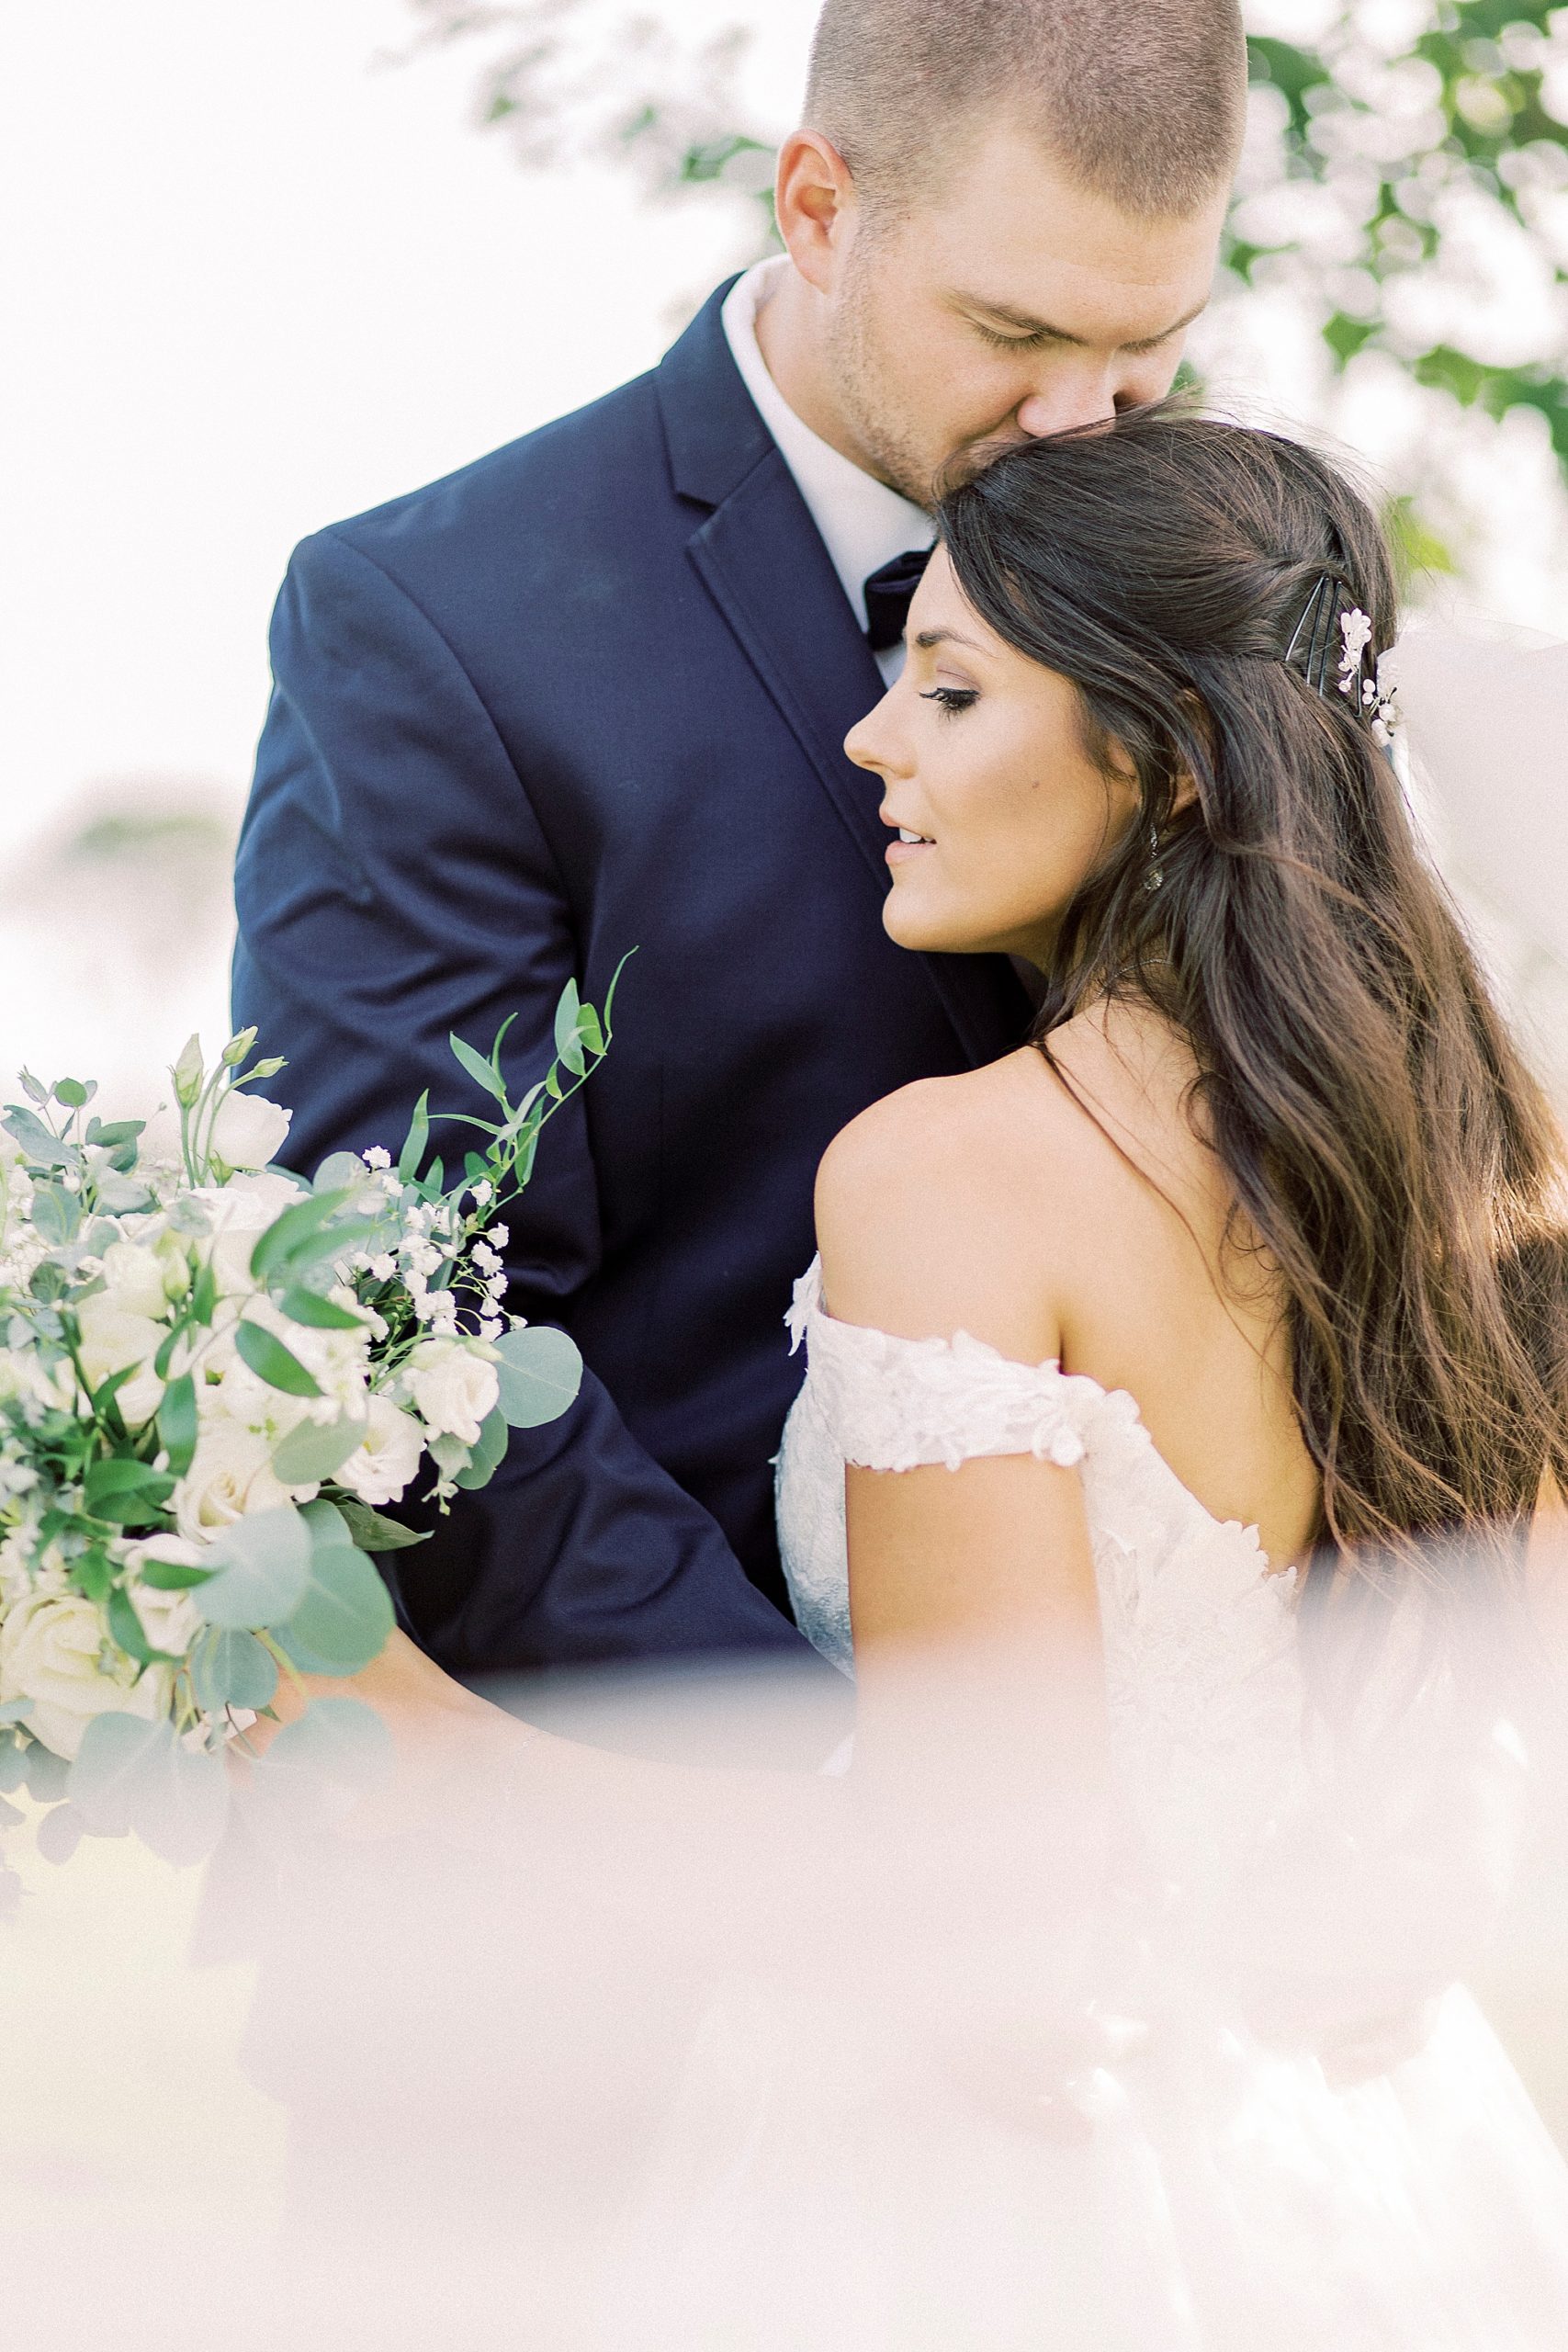 groom kisses bride's forehead during wedding photos